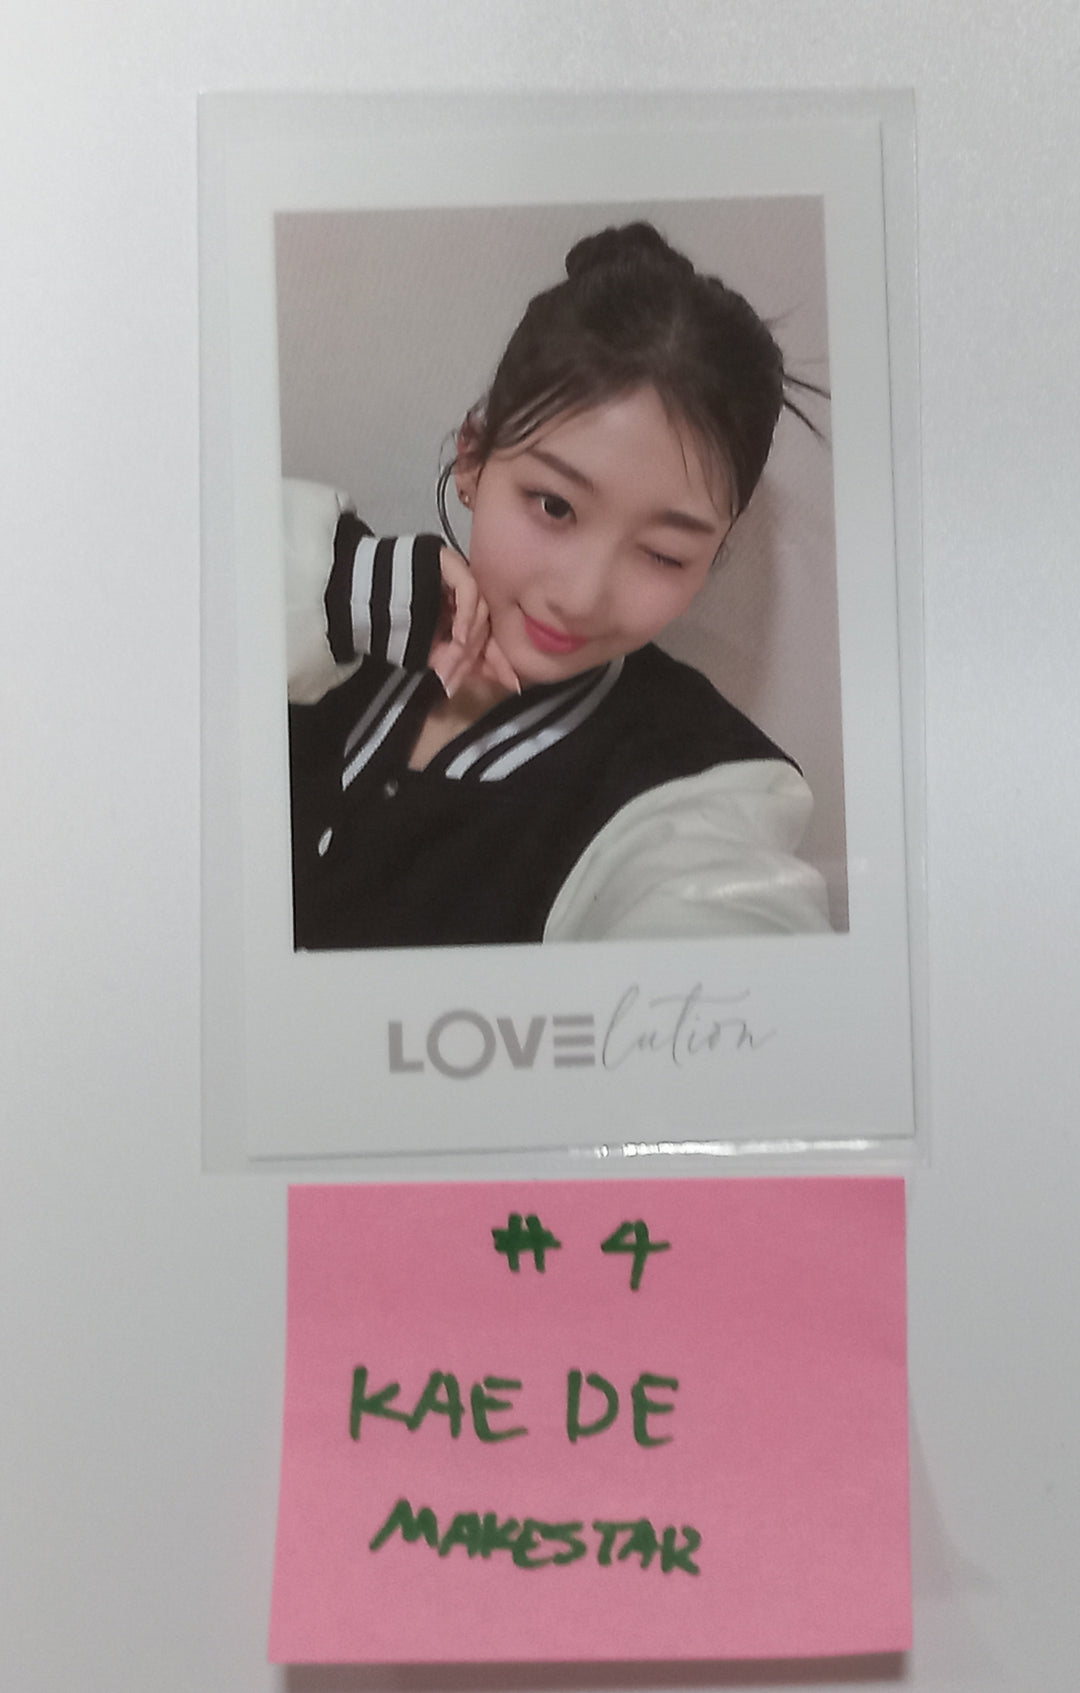 TripleS "LOVElution : MUHAN" - Makestar Fansign Event Polaroid Type Photocard [23.09.21]